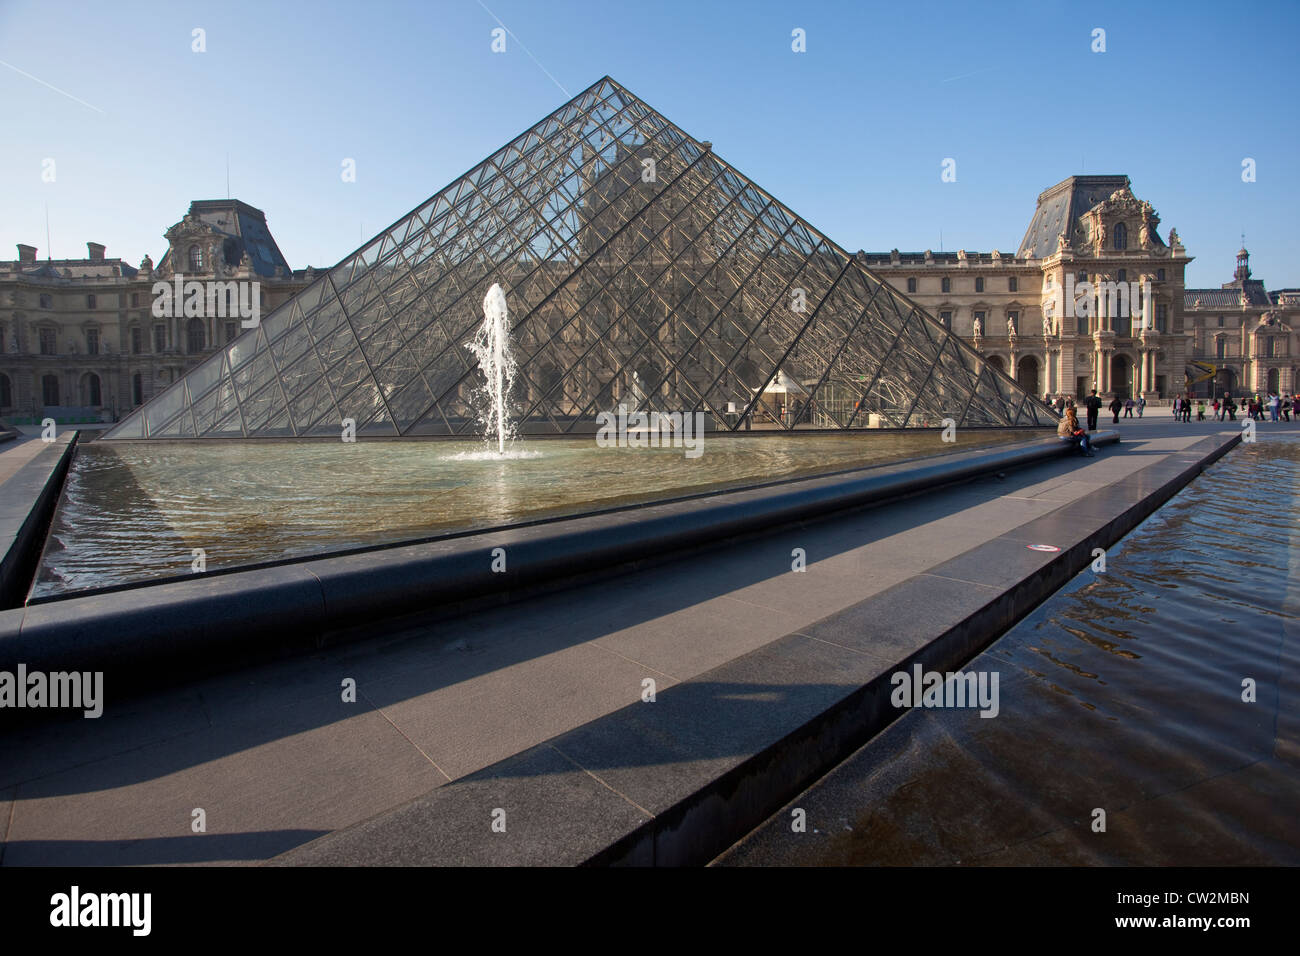 Glass pyramid at Musée du Louvre, Paris, France. Stock Photo